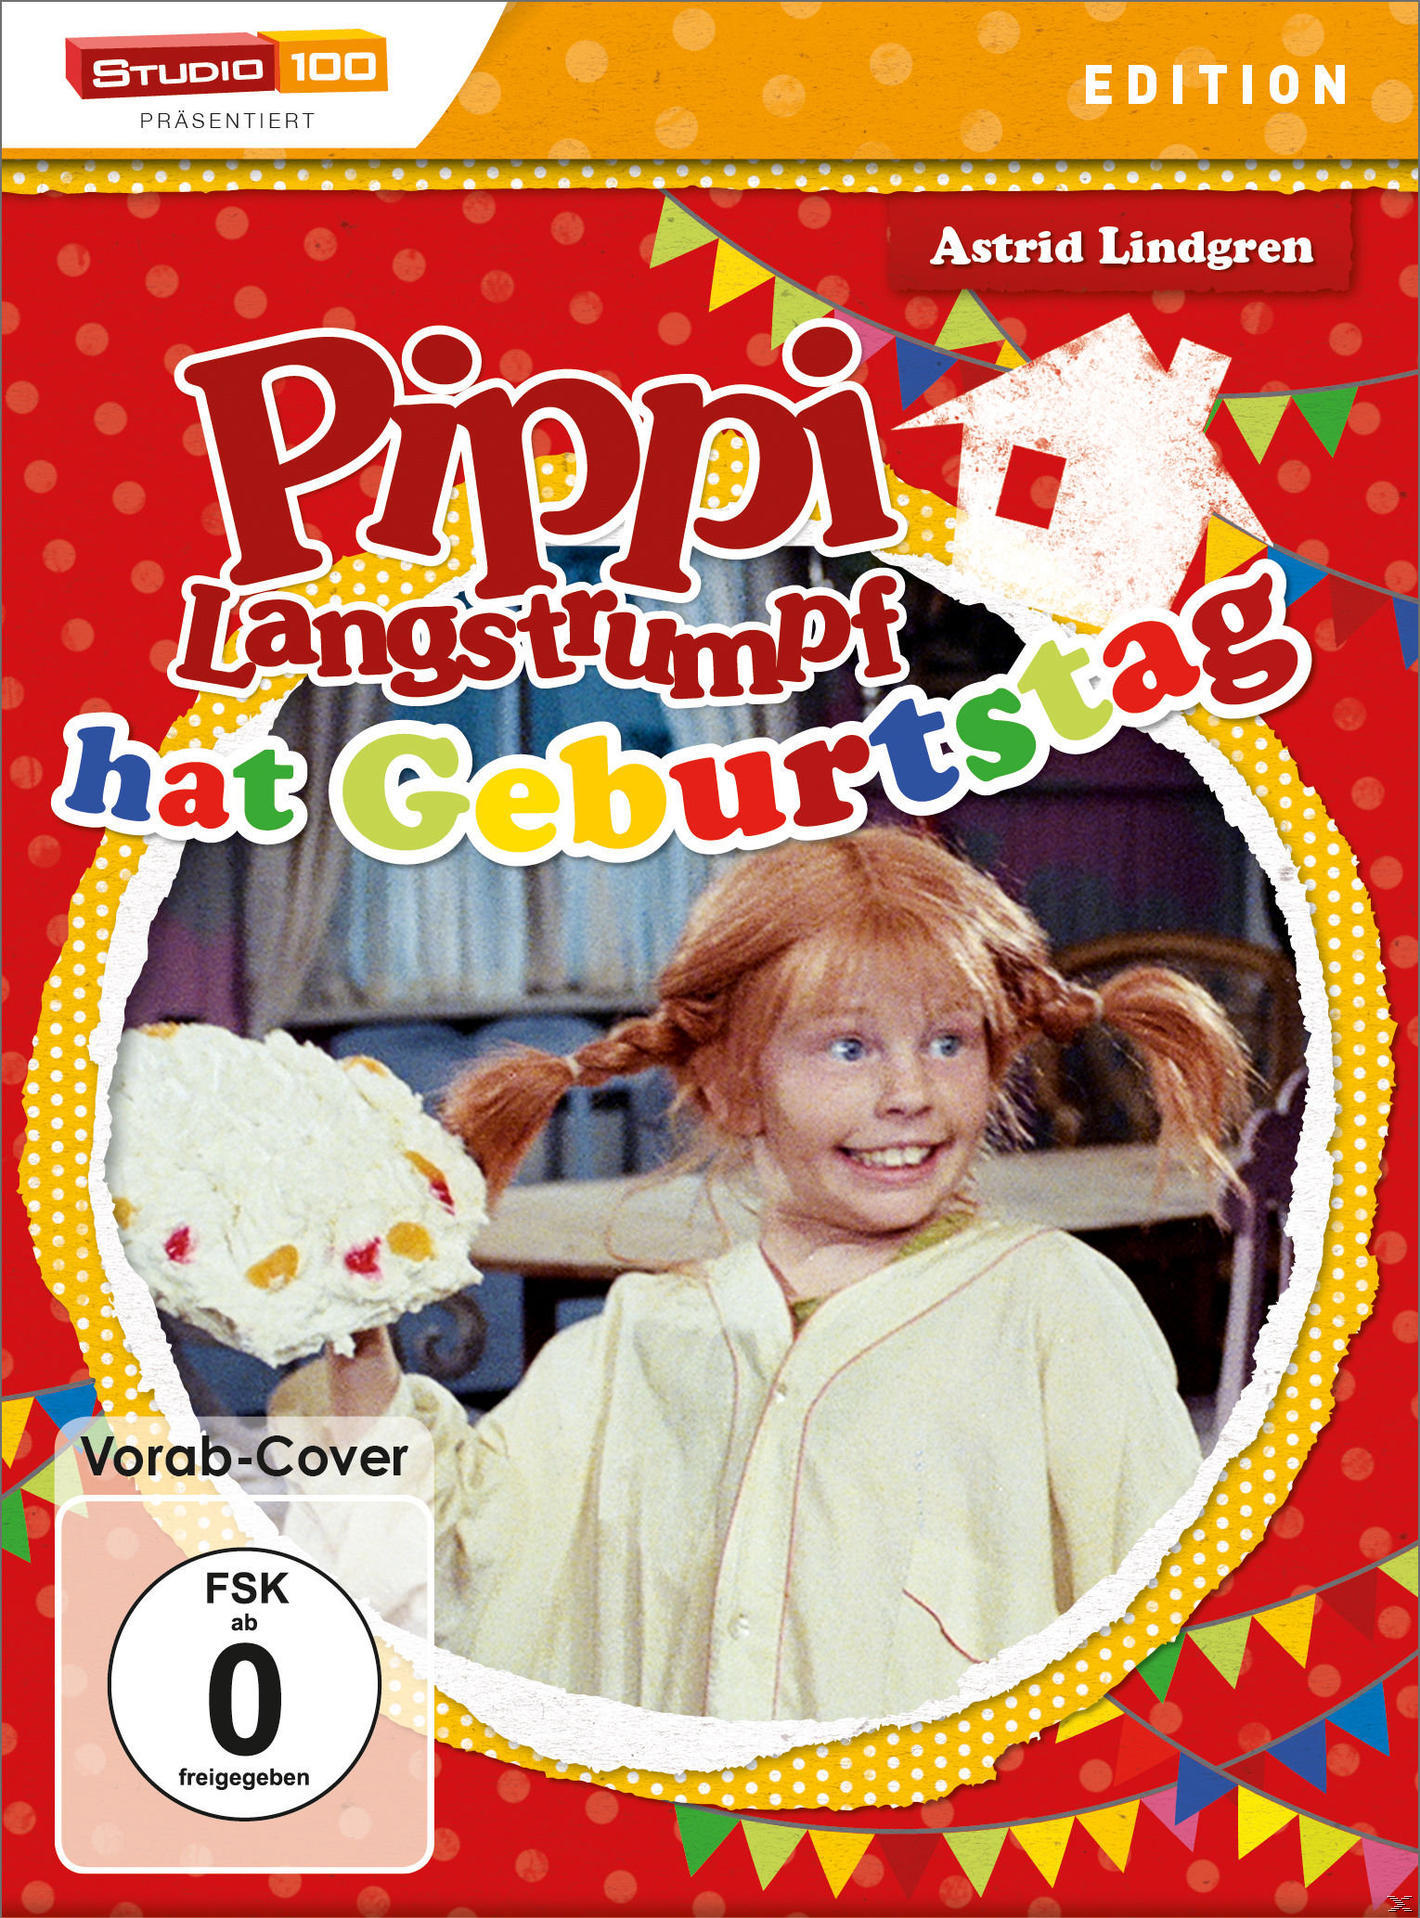 Langstrumpf Pippi DVD Geburtstag hat